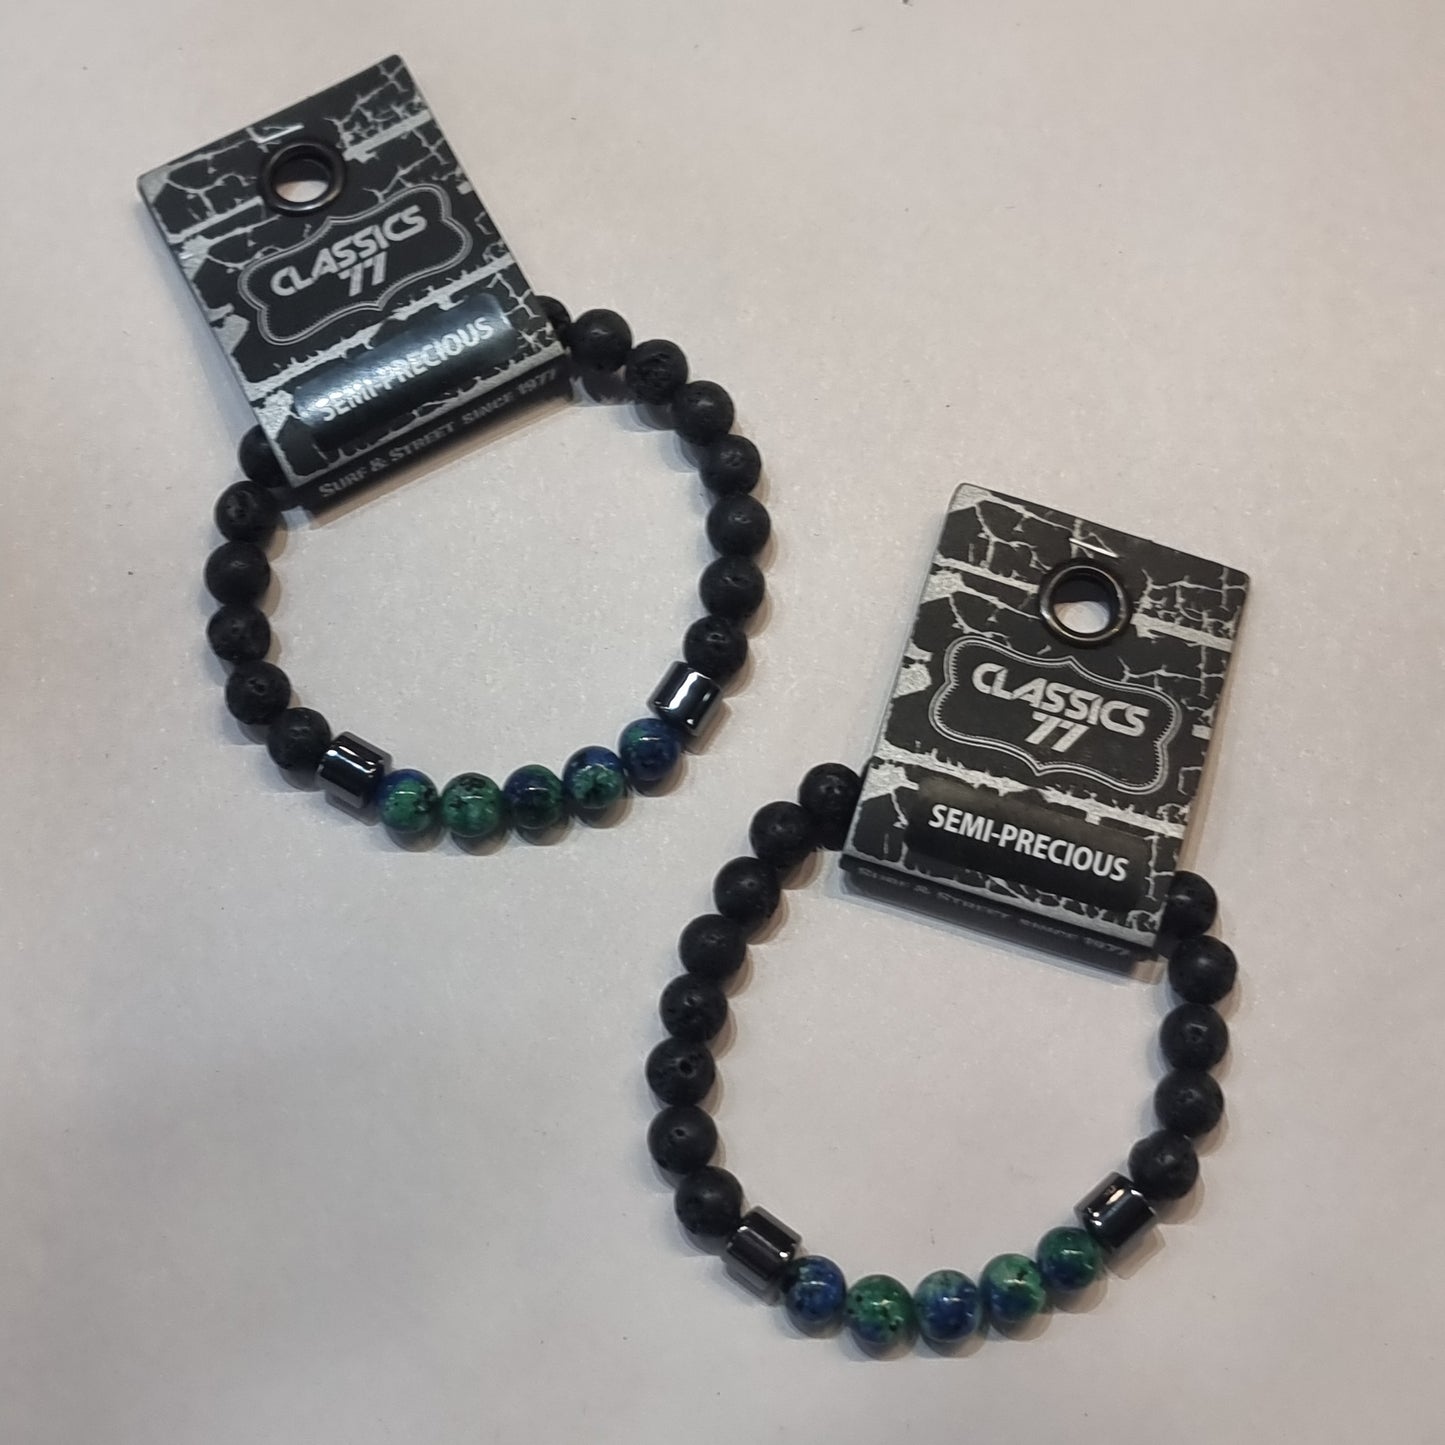 Black lava bead bracelet - Rivendell Shop